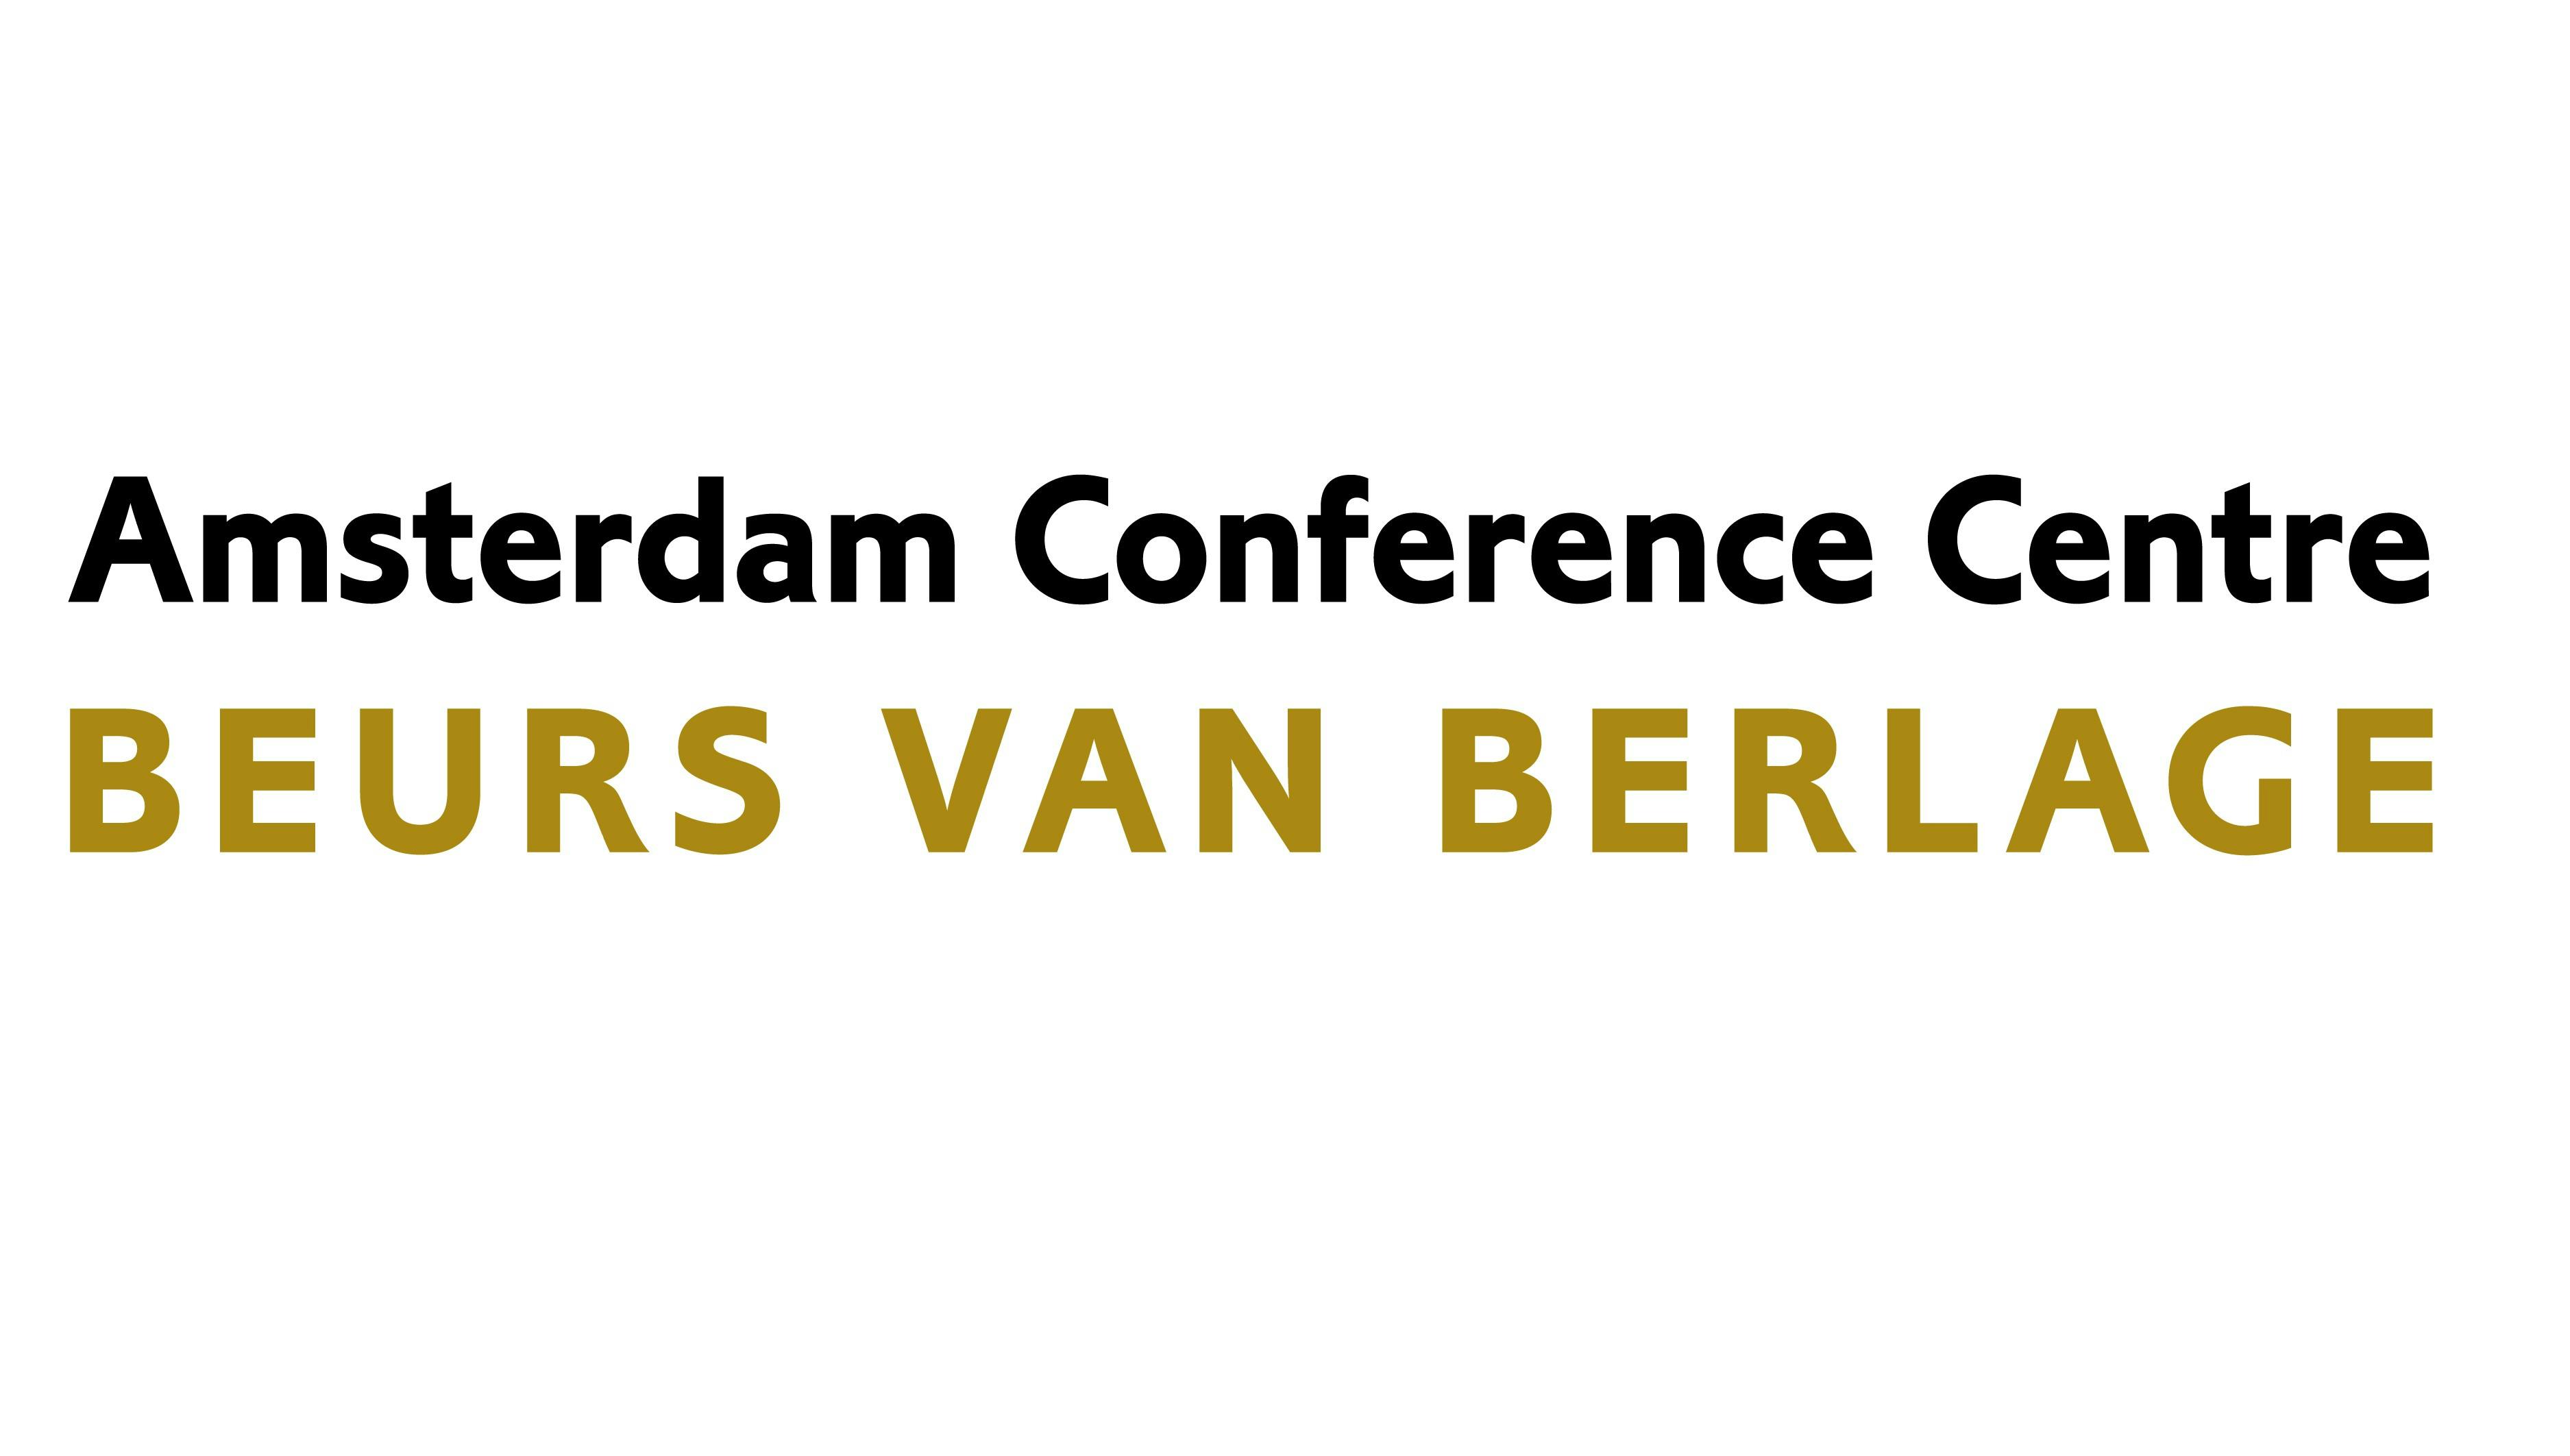 Amsterdam Conference Centre Beurs van Berlage